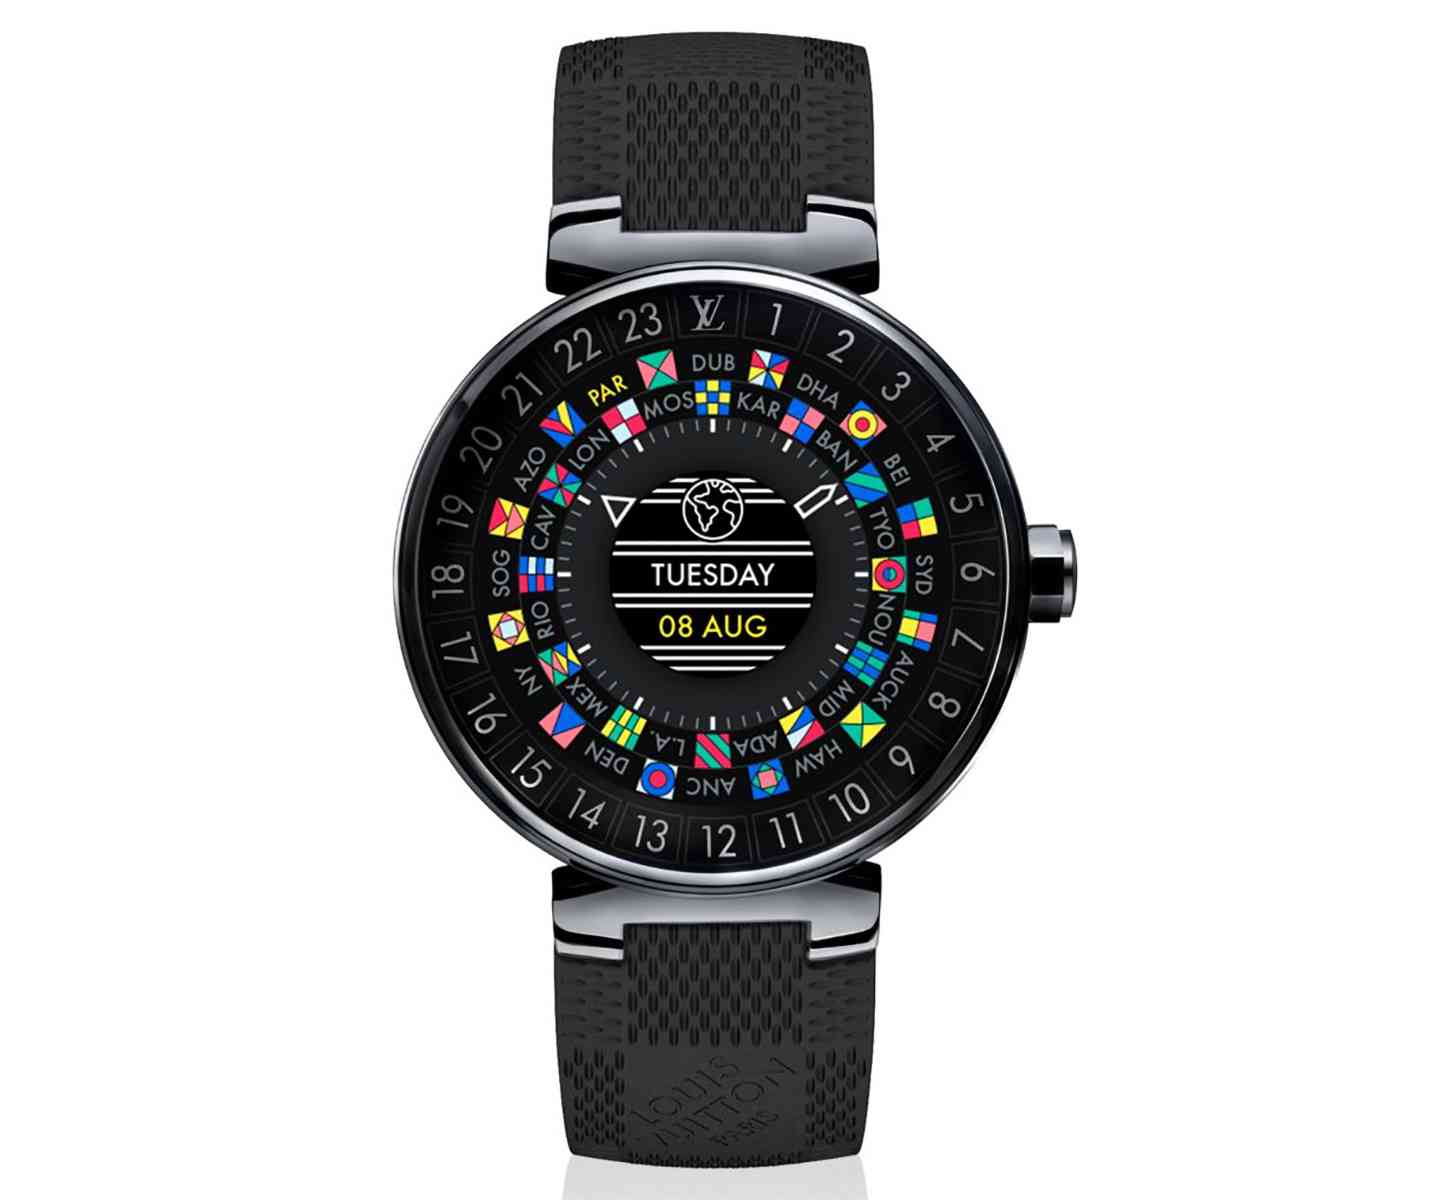 Louis Vuitton Tambour Horizon Black Android Wear smartwatch